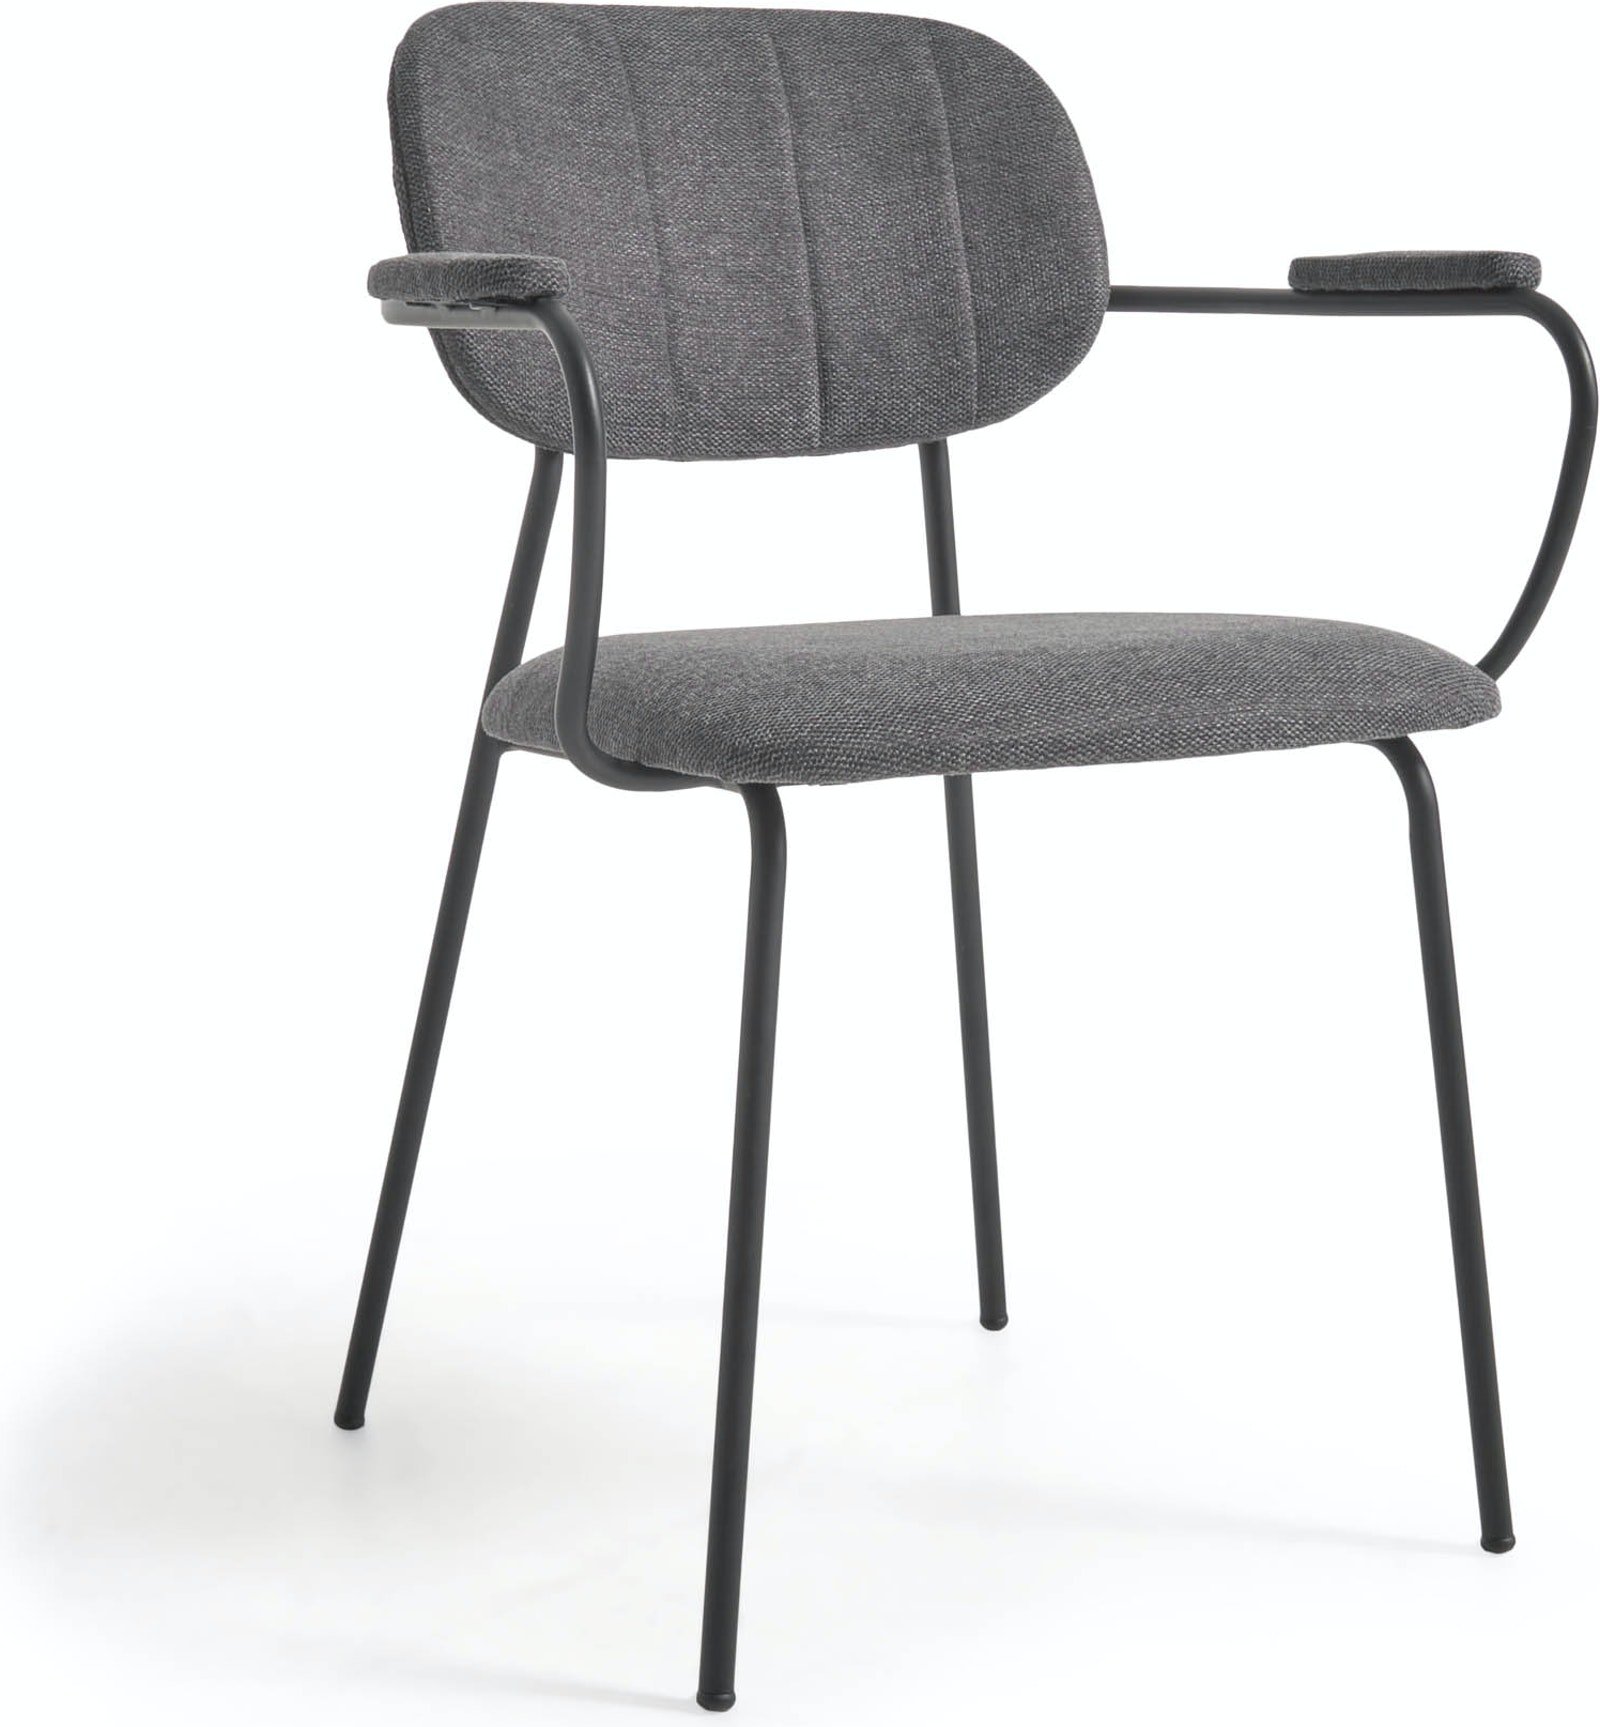 Spisebordsstol, moderne, nordisk, stof by LaForma (H: 78 cm. B: 60 cm. L: 54 cm., Lysegrå) Lysegrå ∙ 1299.00 DKK